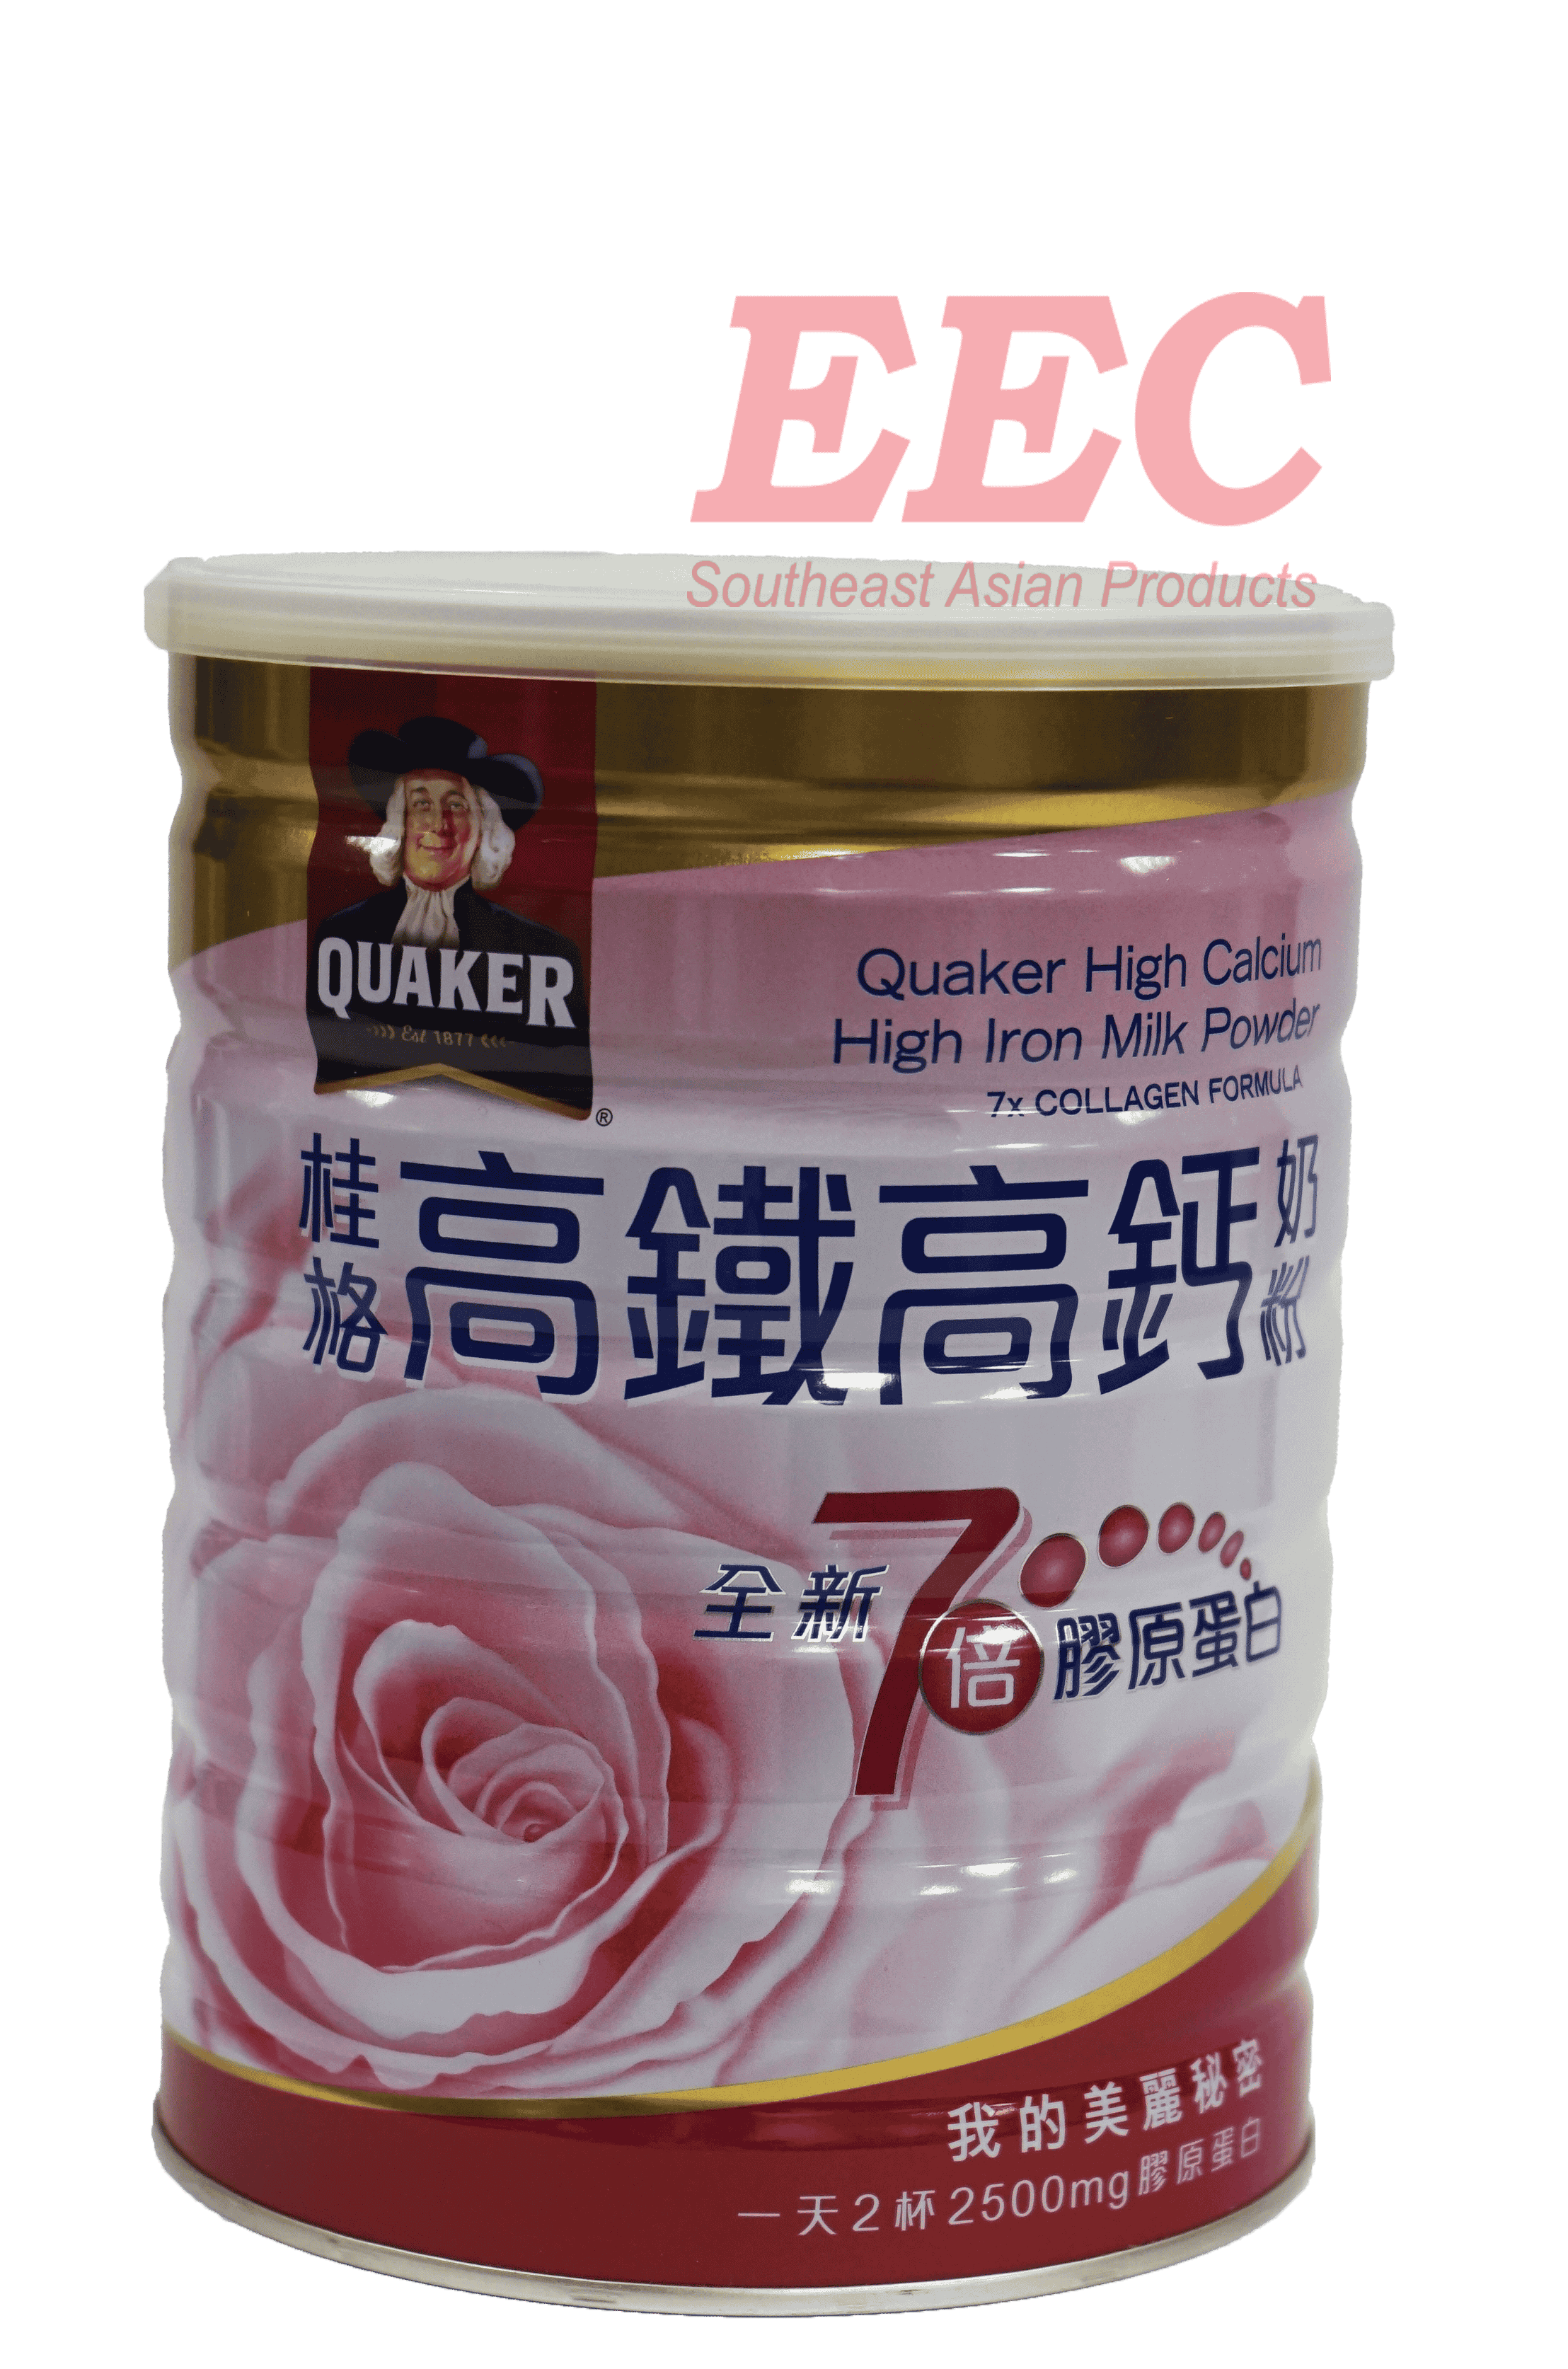 QUAKER High Calcium High Iron Milk Powder 750g